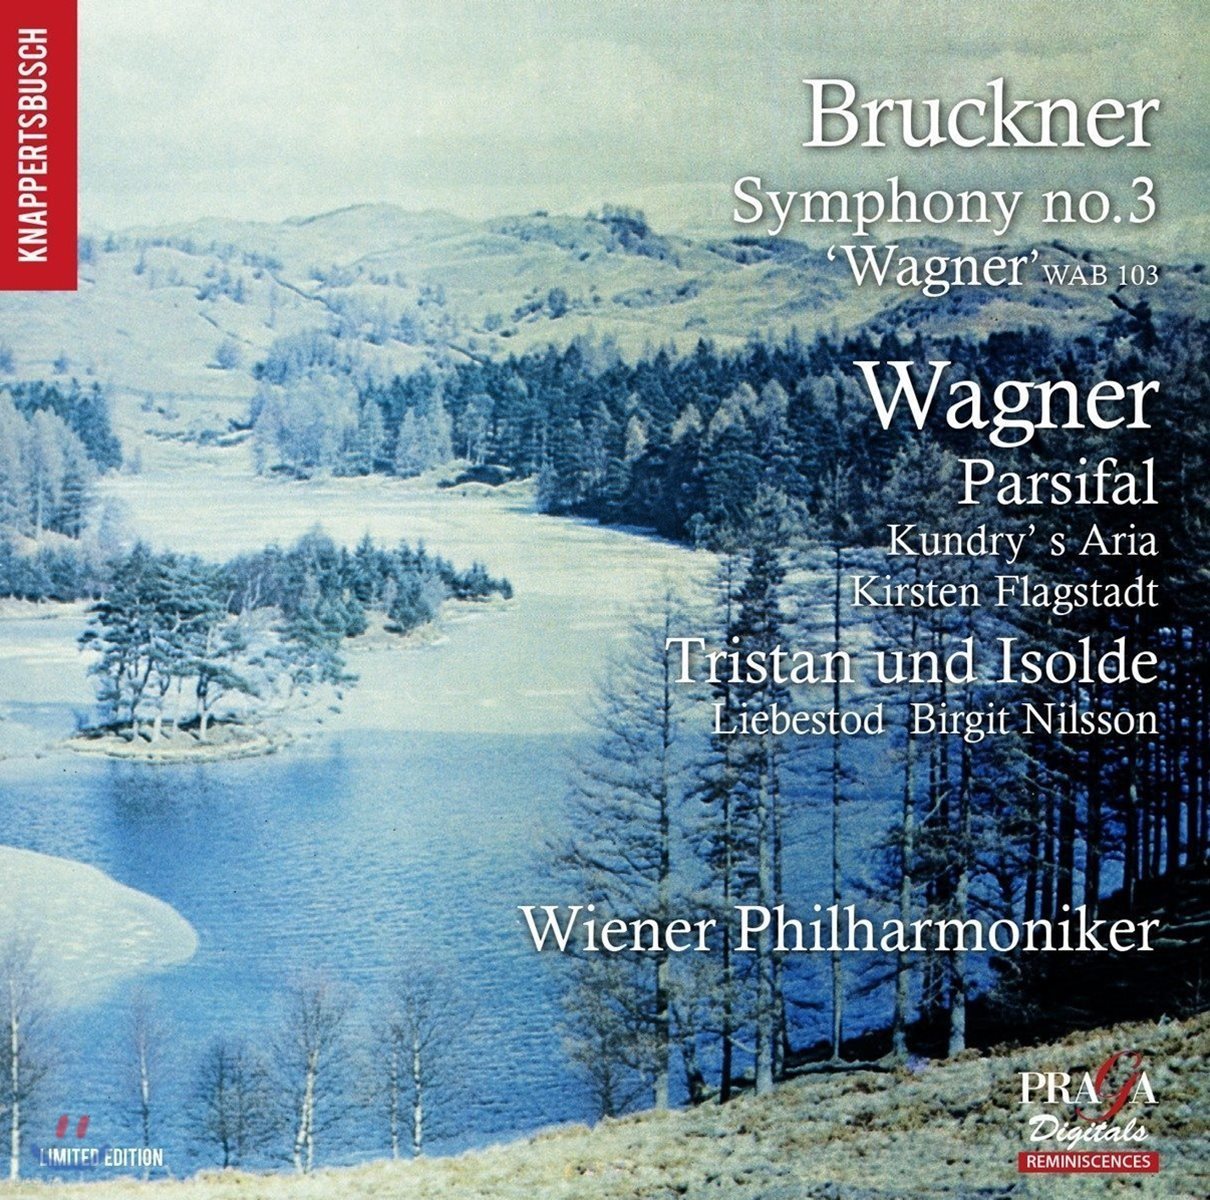 Hans Knappertsbusch 브루크너: 교향곡 3번 / 바그너: 파르지팔, 트리스탄과 이졸데 &#39;사랑의 죽음&#39; (Bruckner: Symphony WAB103 / Wagner: Parsifal, Tristan und Isolde &#39;Liebestod&#39;)